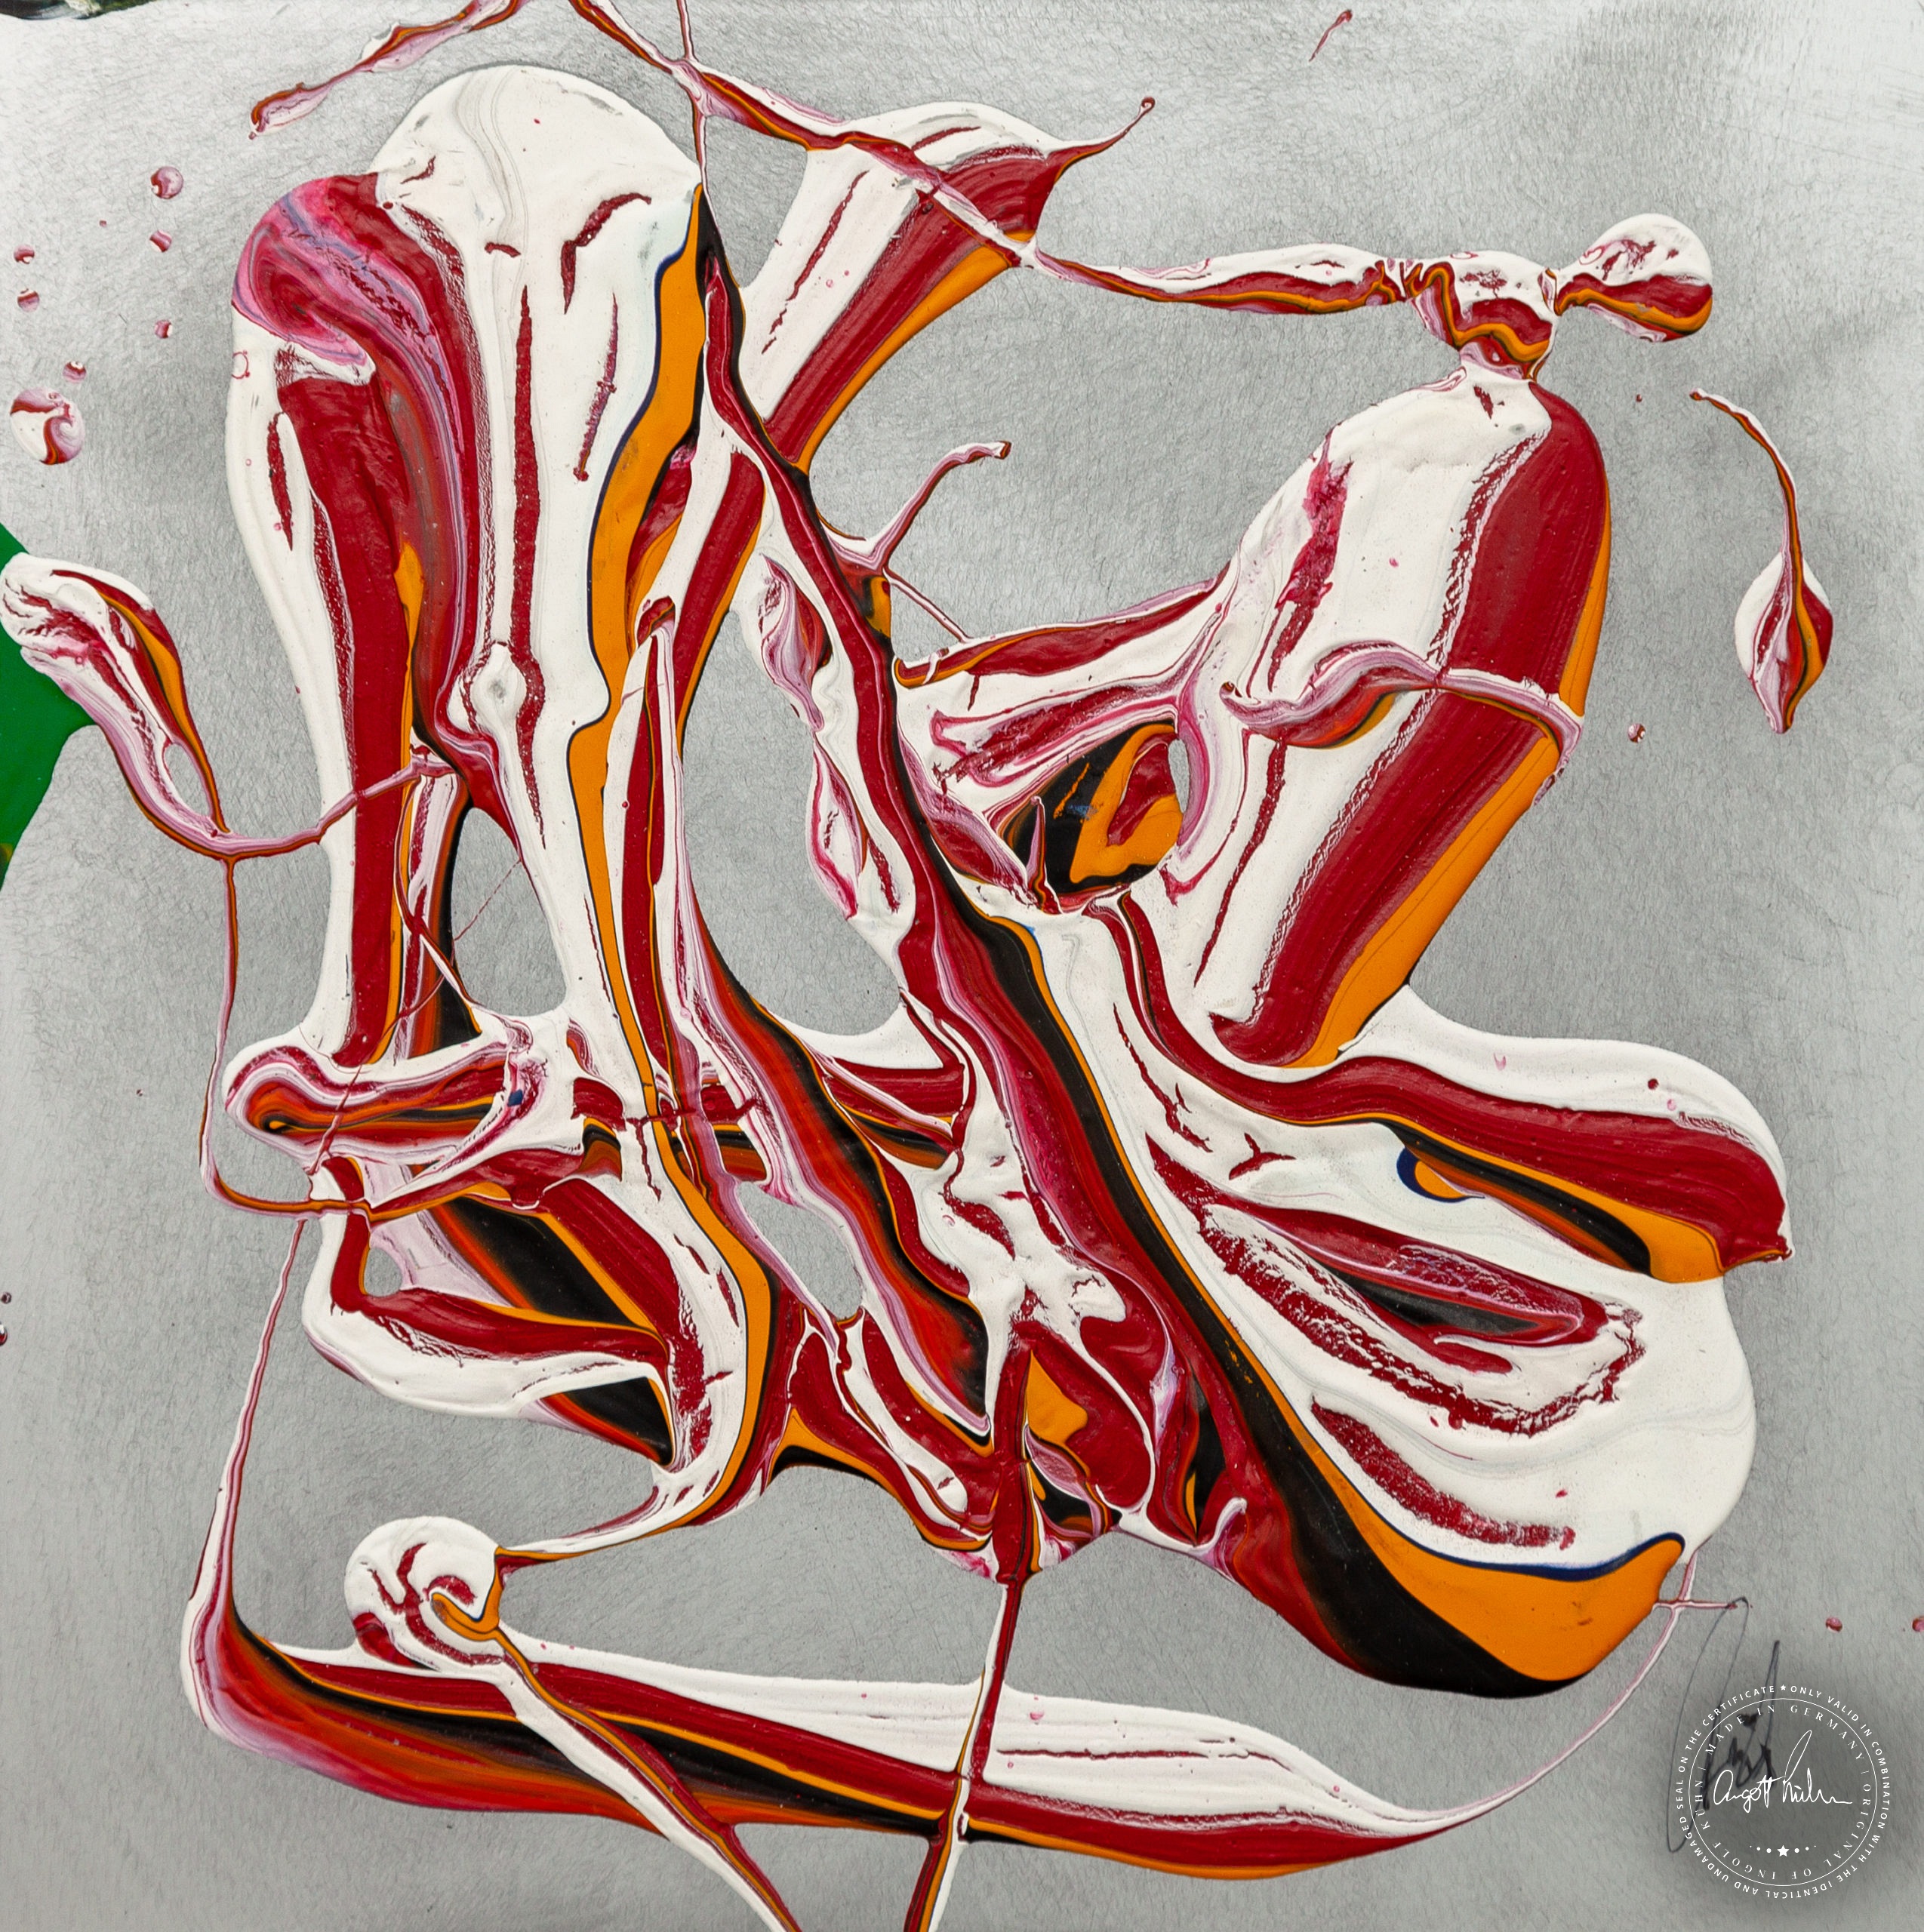 Artwork by Ingolf Kühn Lilies Awakening Art-No 11065 acrylic on dibond 30x30 2019